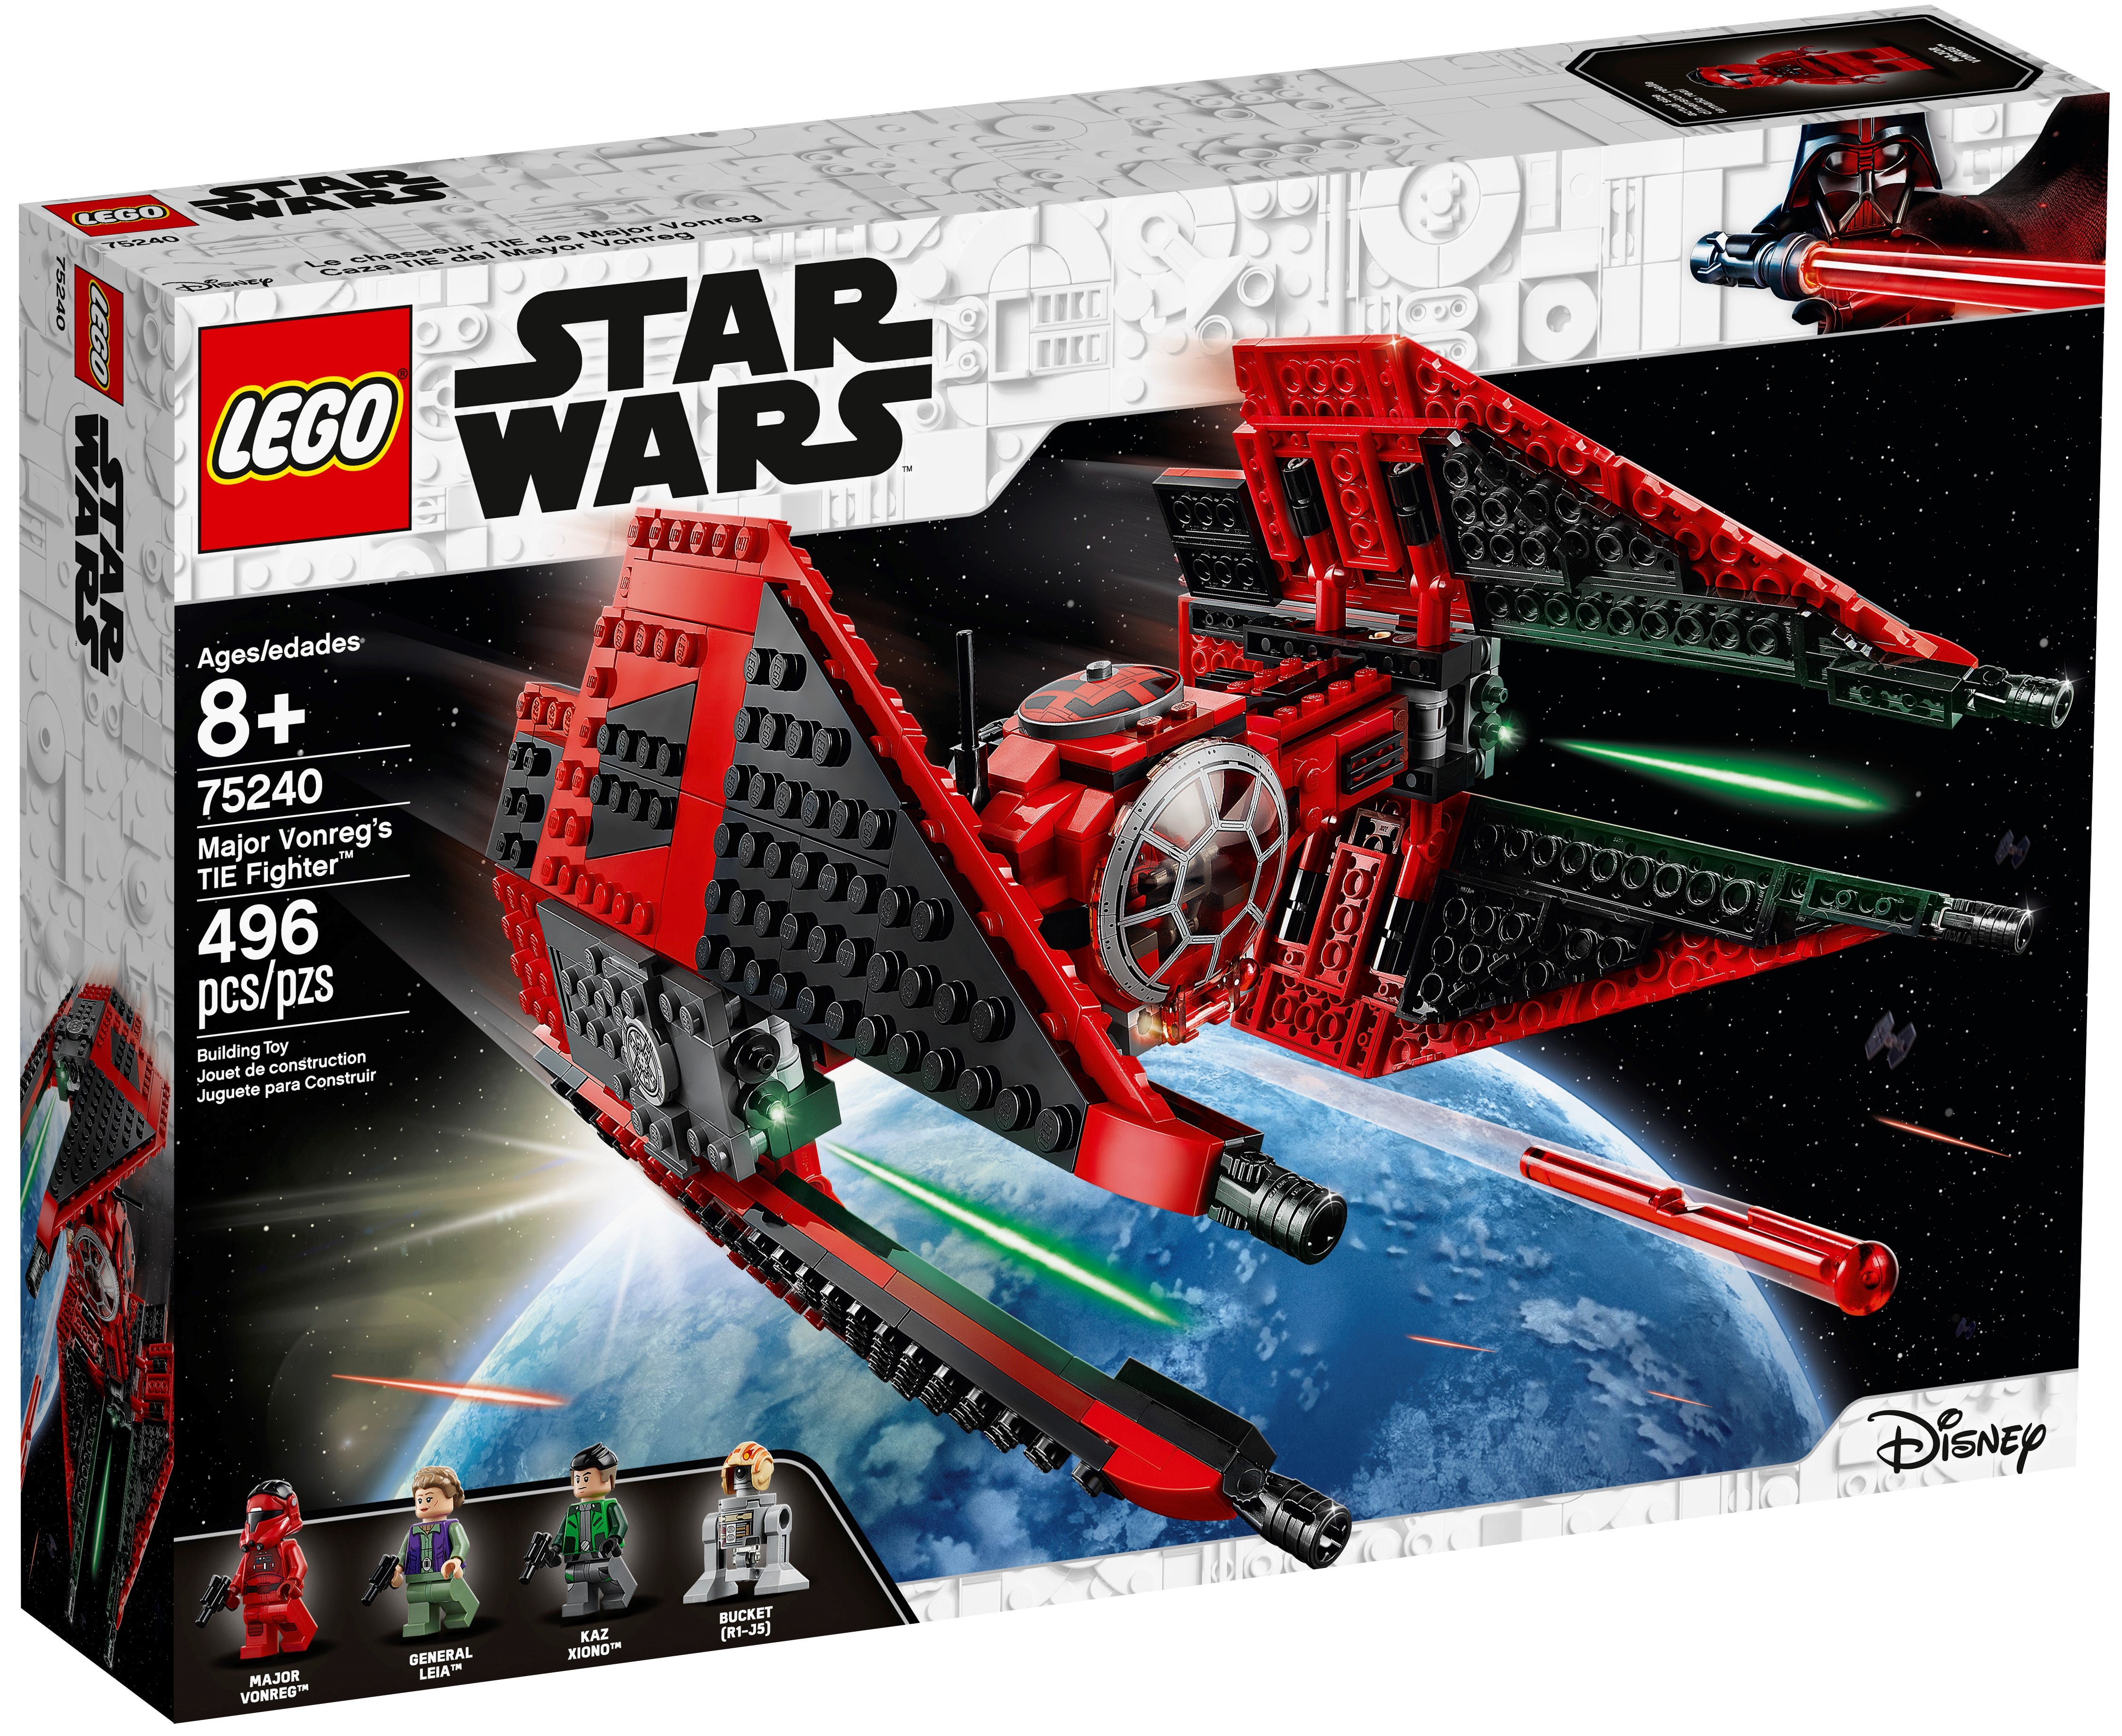 R1-J5 NEW LEGO Bucket sw1013 FROM SET 75240 STAR WARS RESISTANCE